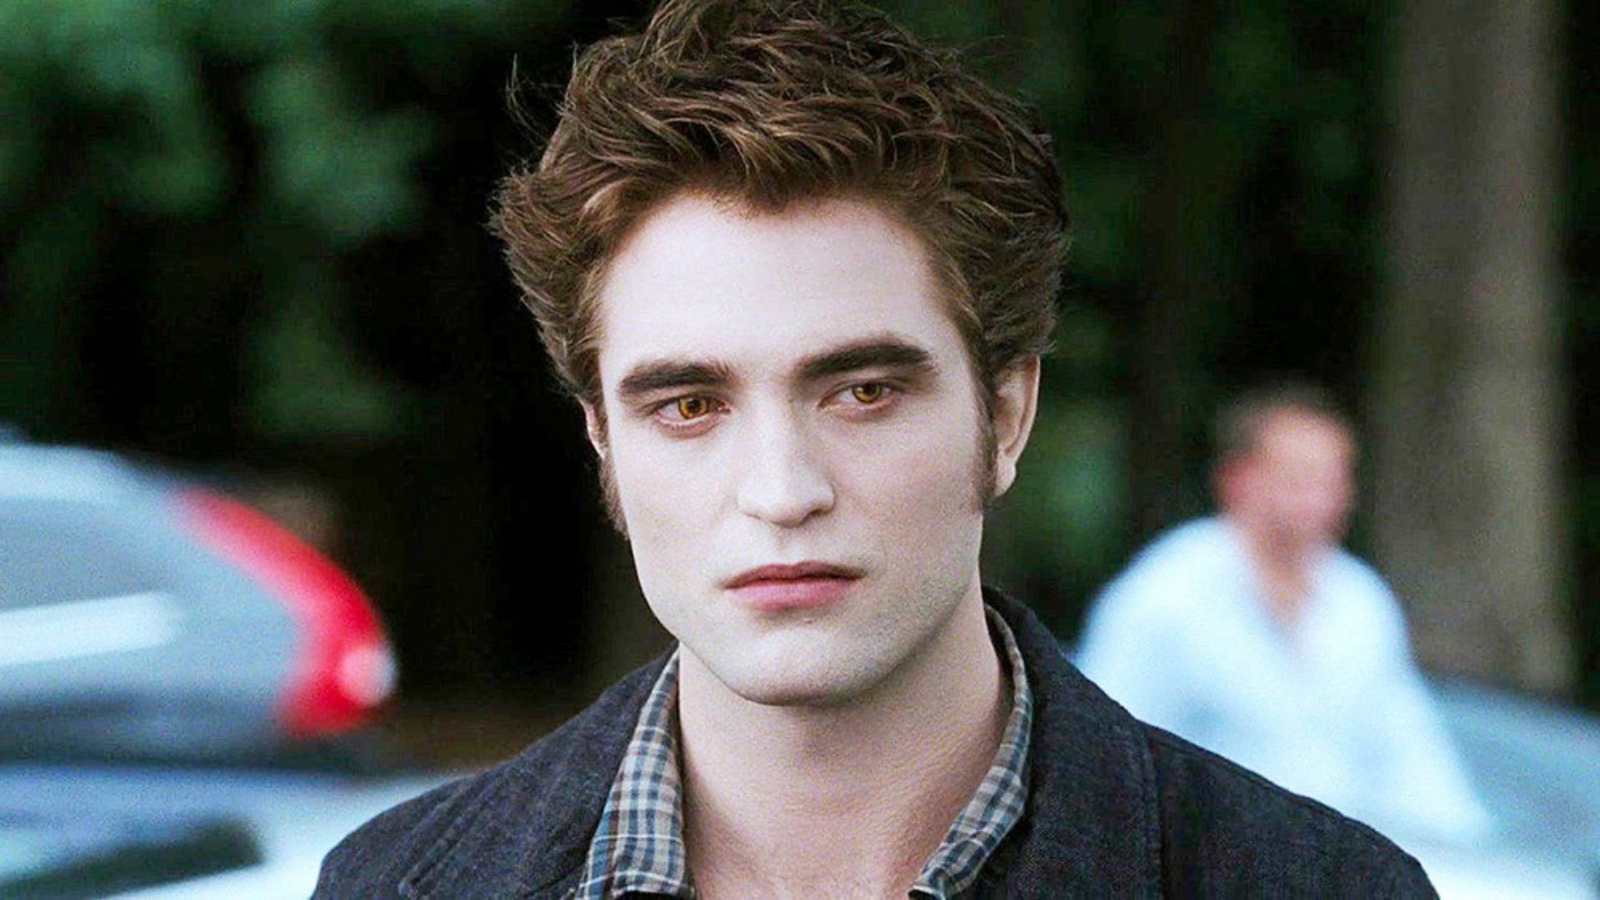 Robert Pattinson played Edward Cullen in The Twilight Saga